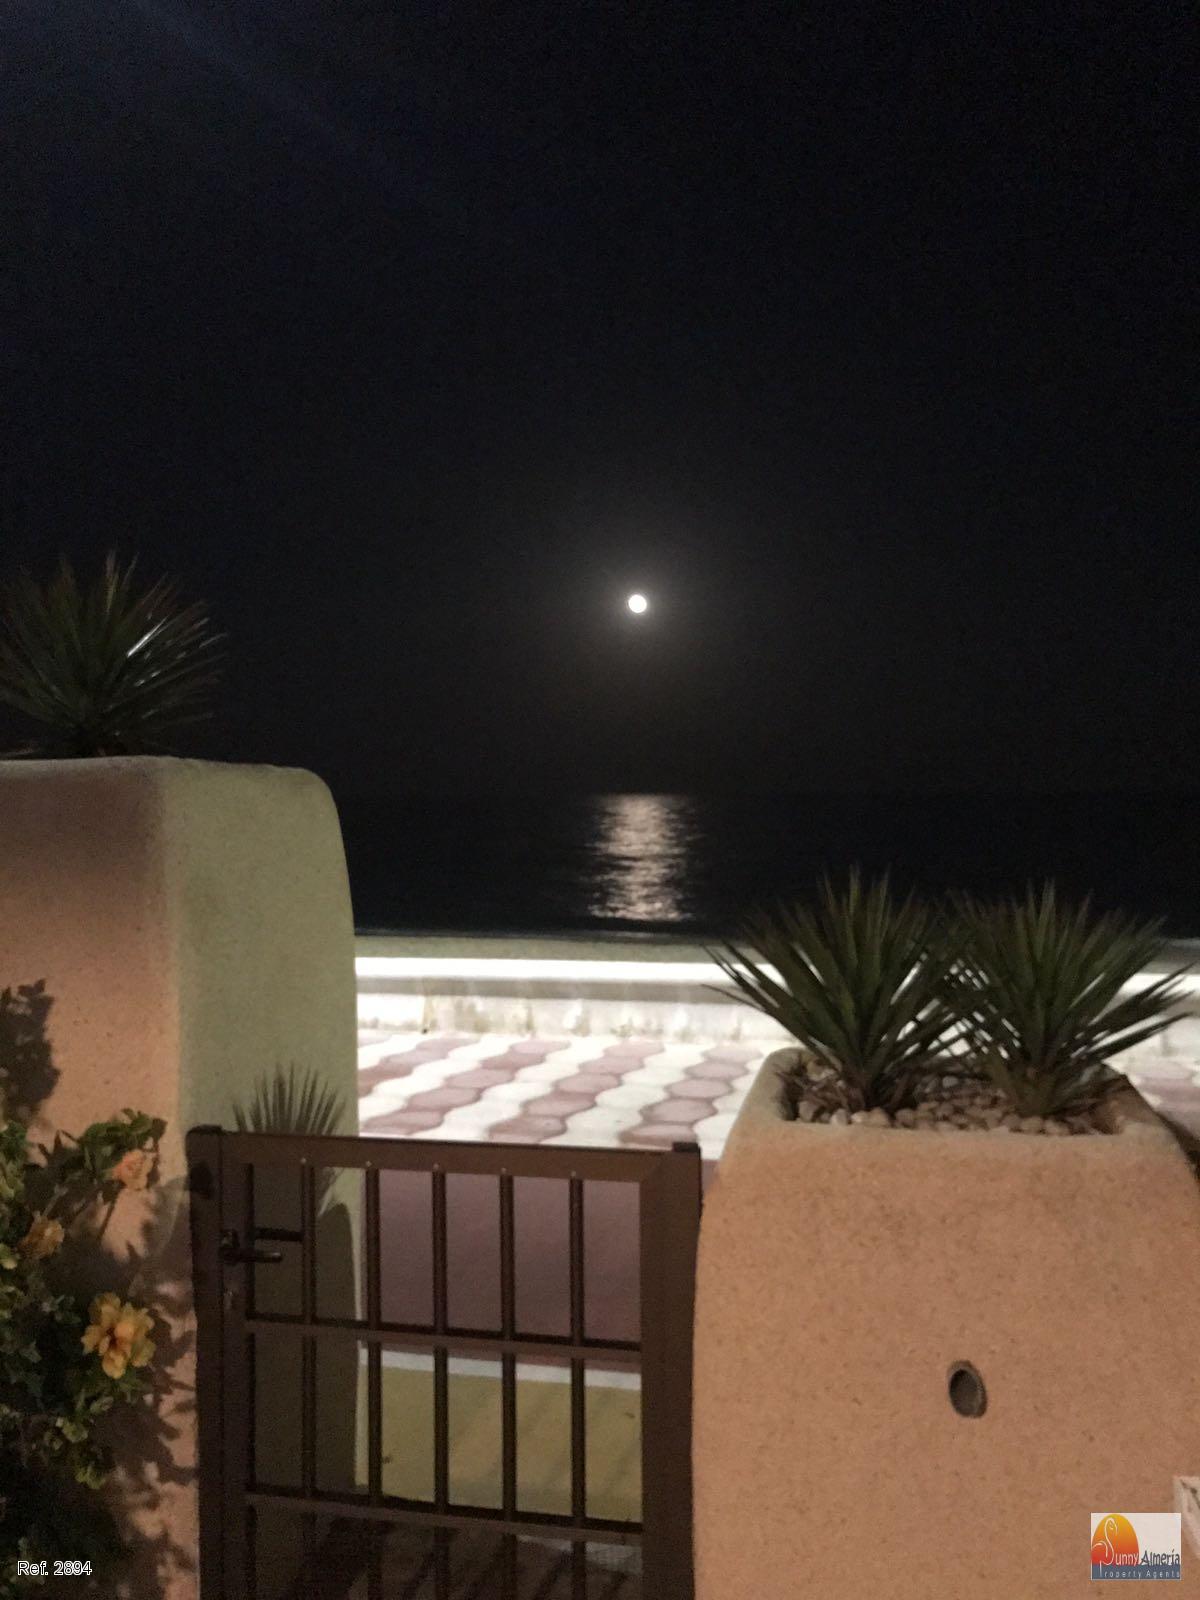 Bungalow for rent in Playa Serena (Roquetas de Mar), 900 €/month (Season)